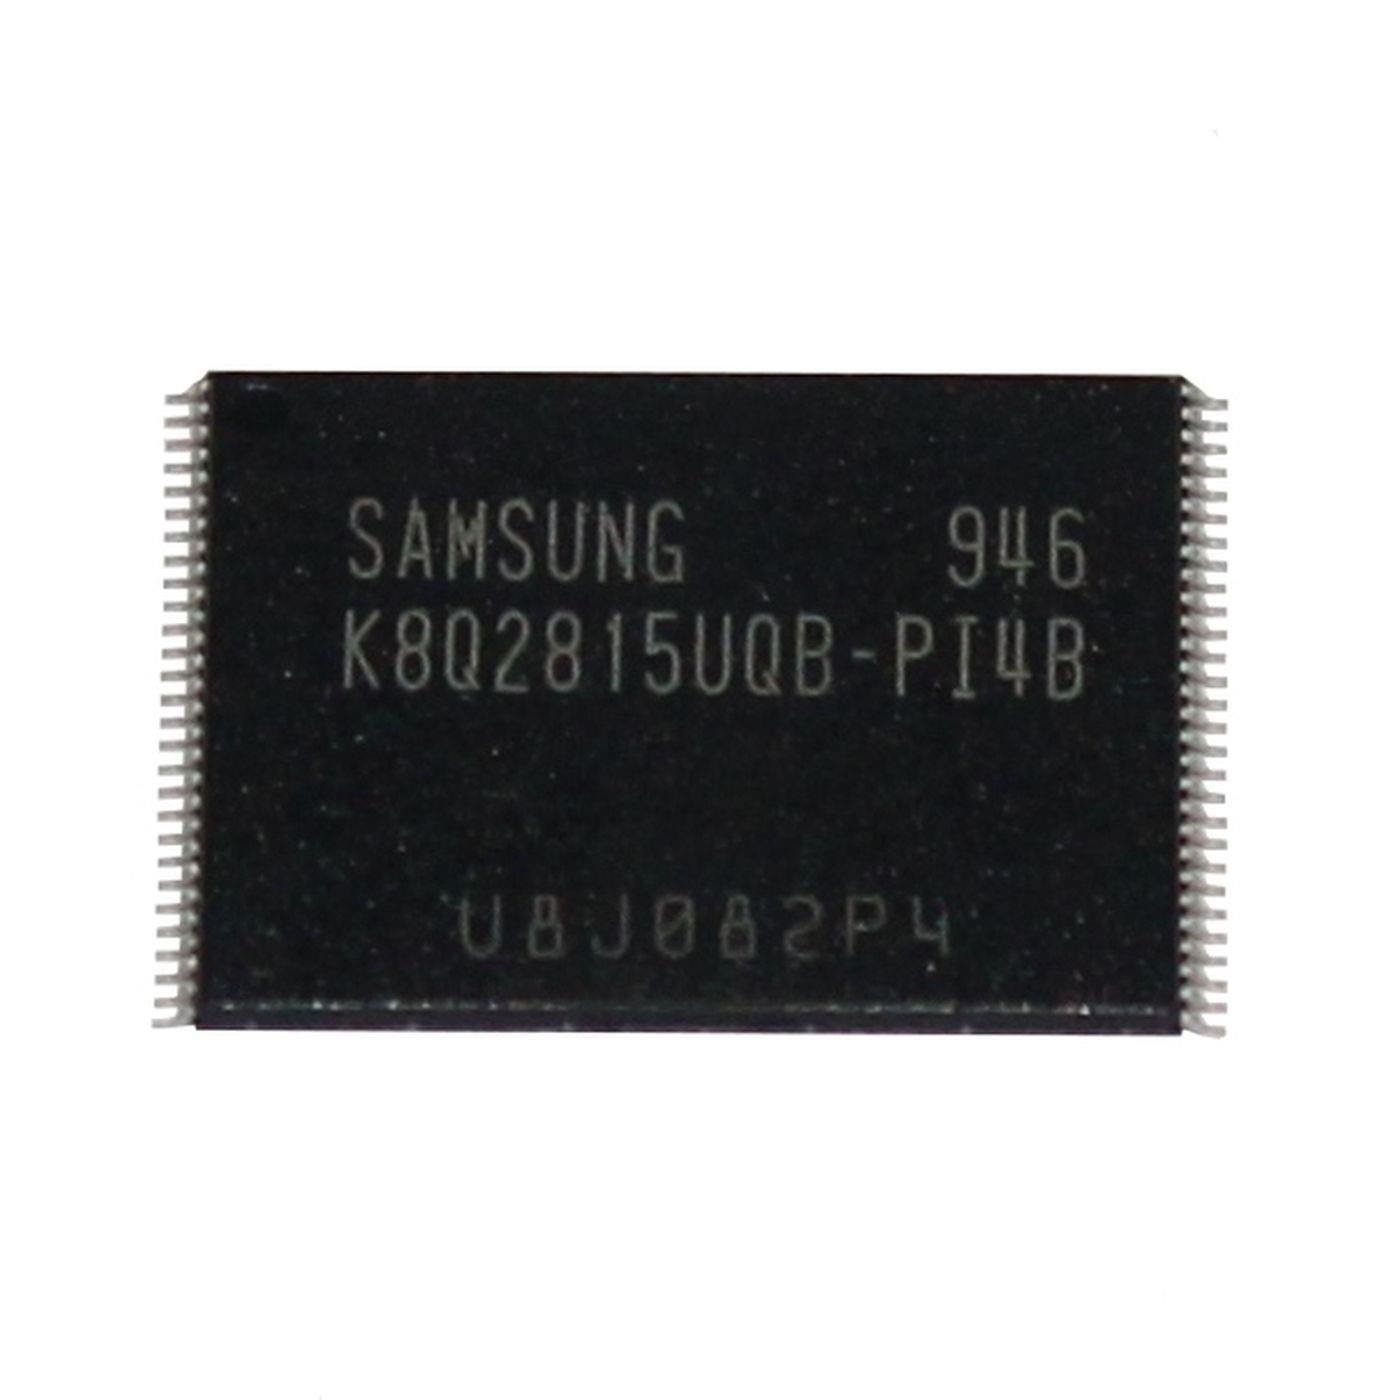 NAND Speicher für PS3 IC Samsung K8Q2815UQB-PI4B 56TSOP